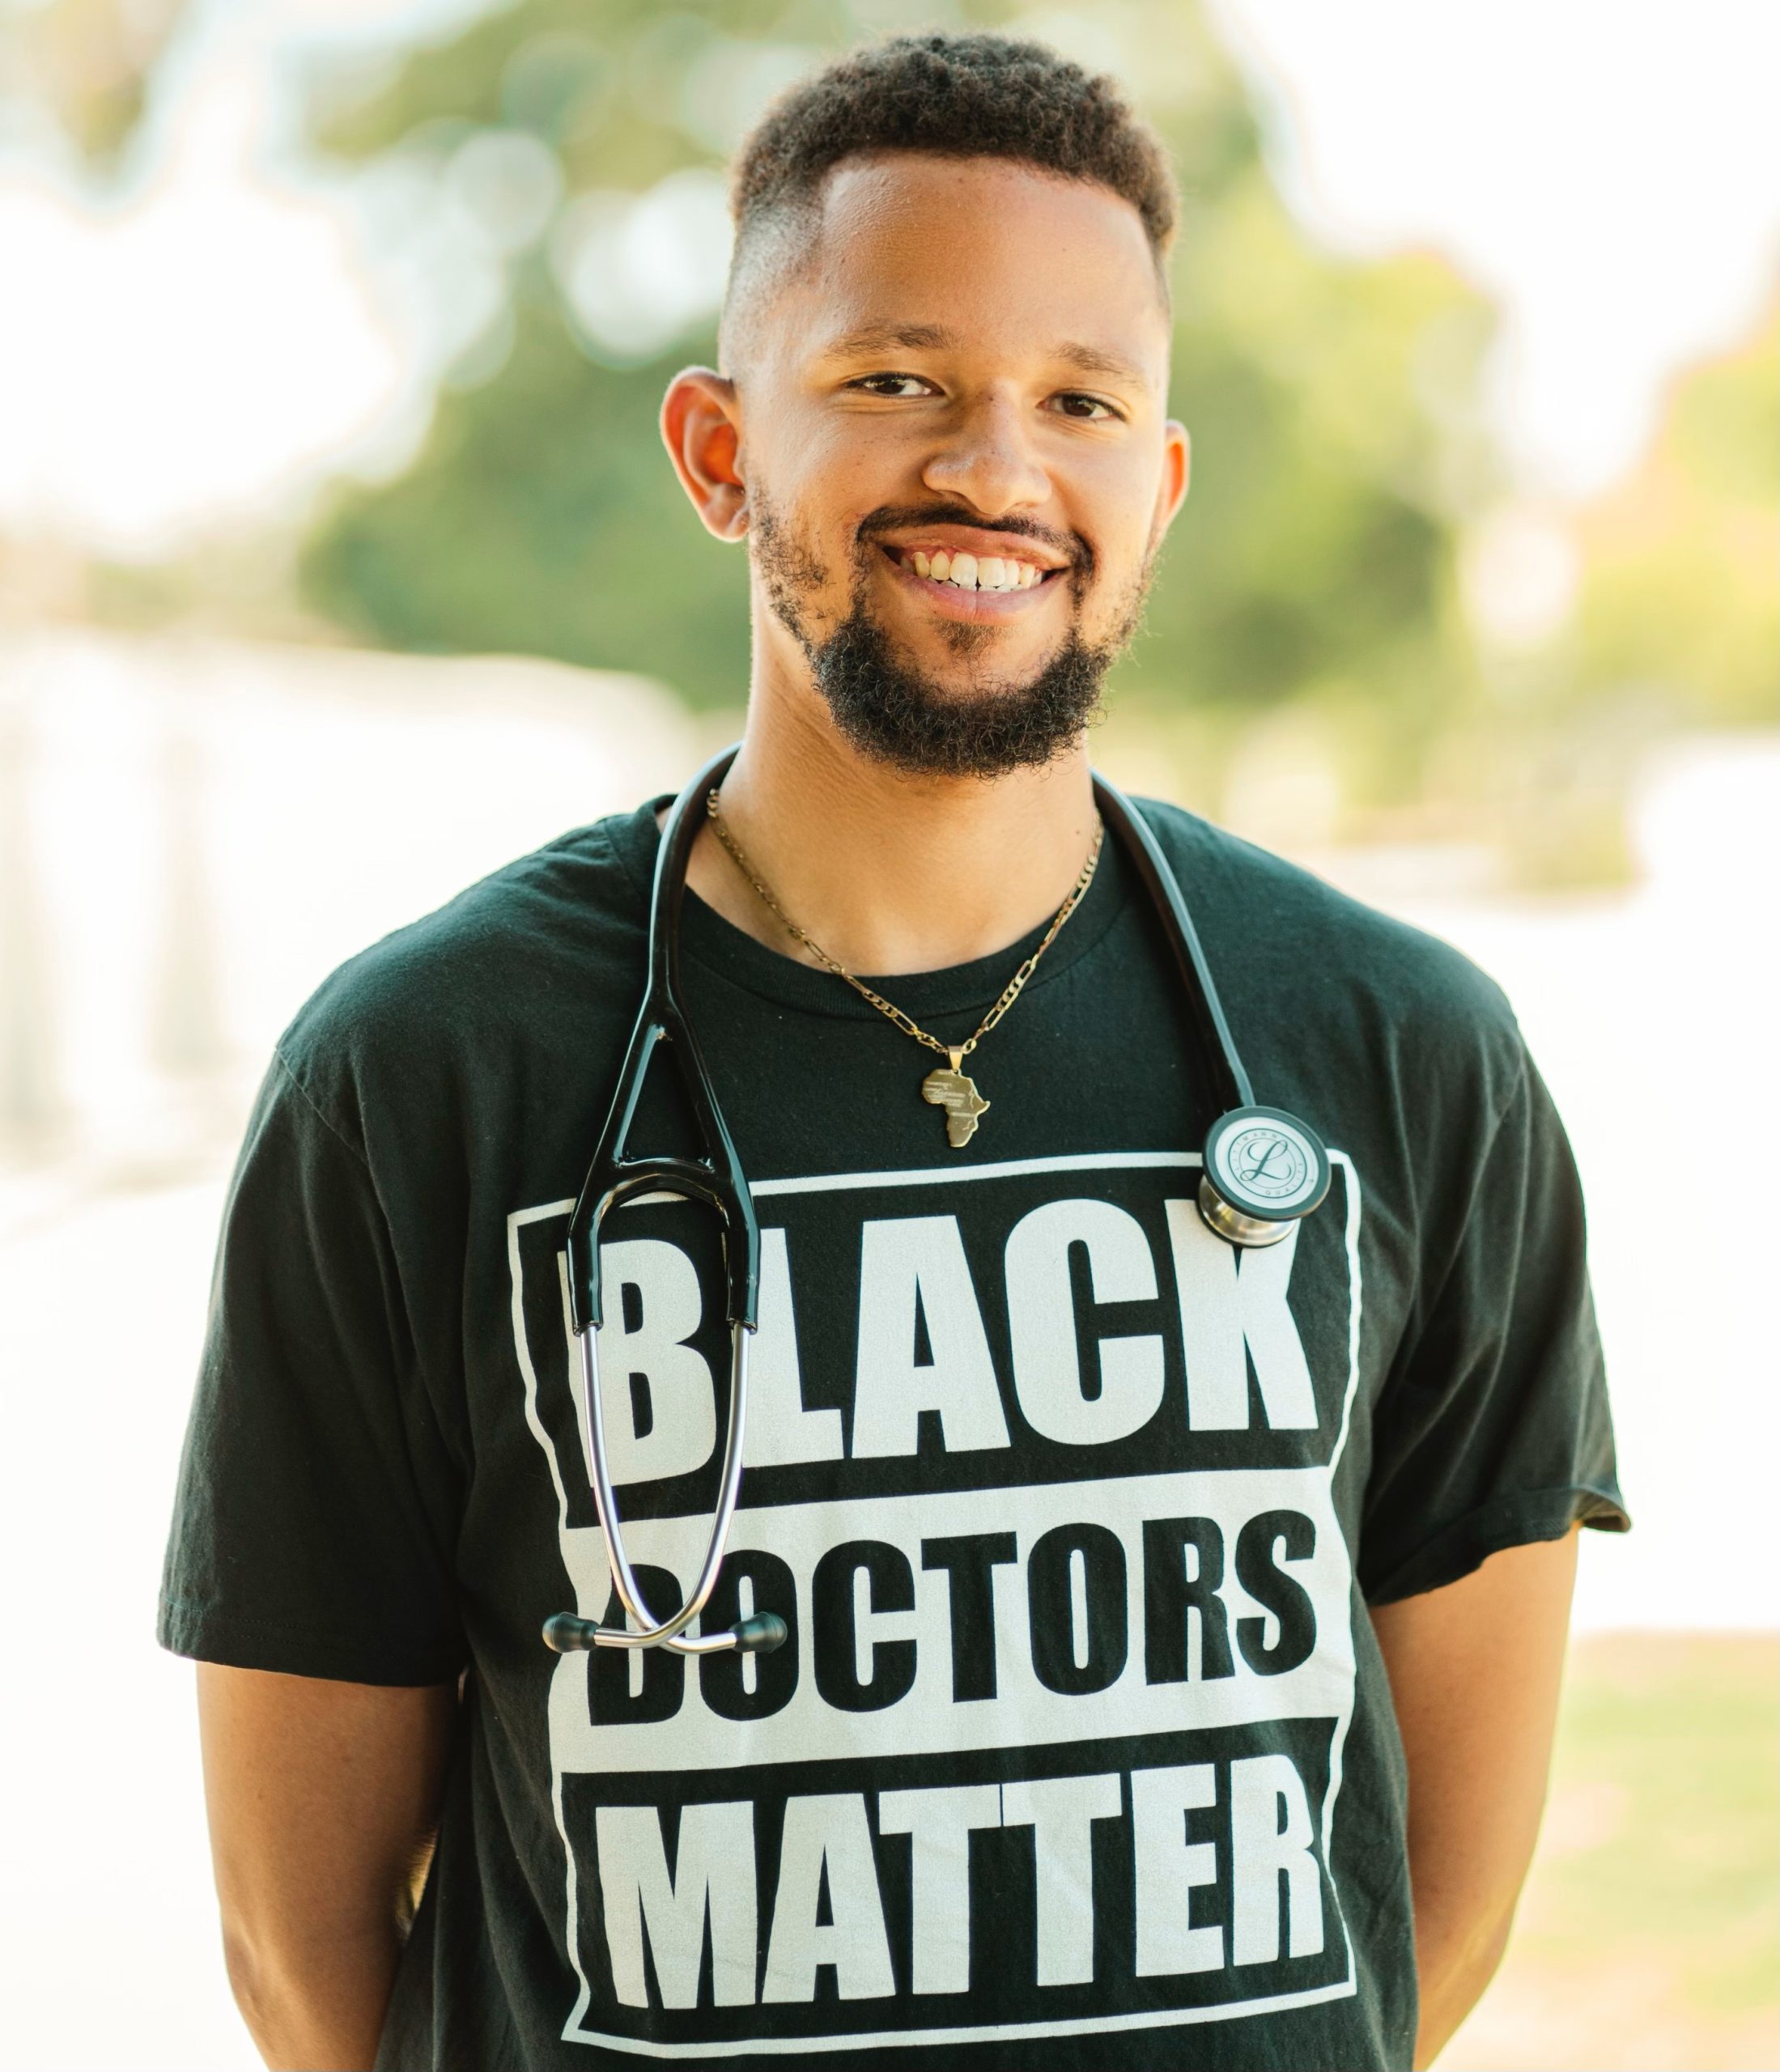 Makeen Yasar, wearing a shirt that says "Black Doctors Matter"